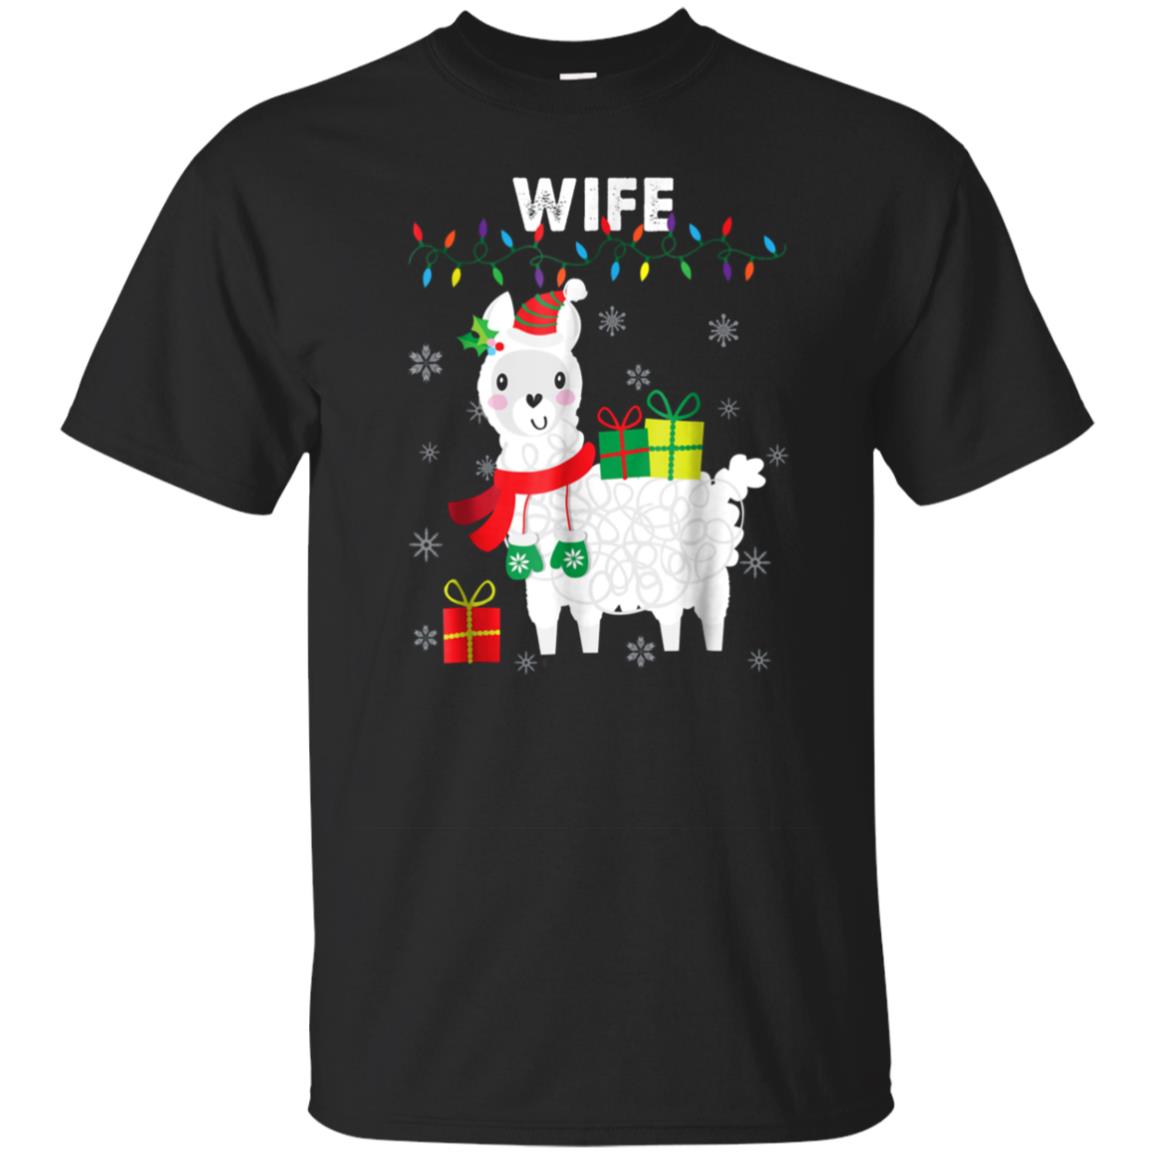 Wife - Santa Hat Christmas Family Shirt